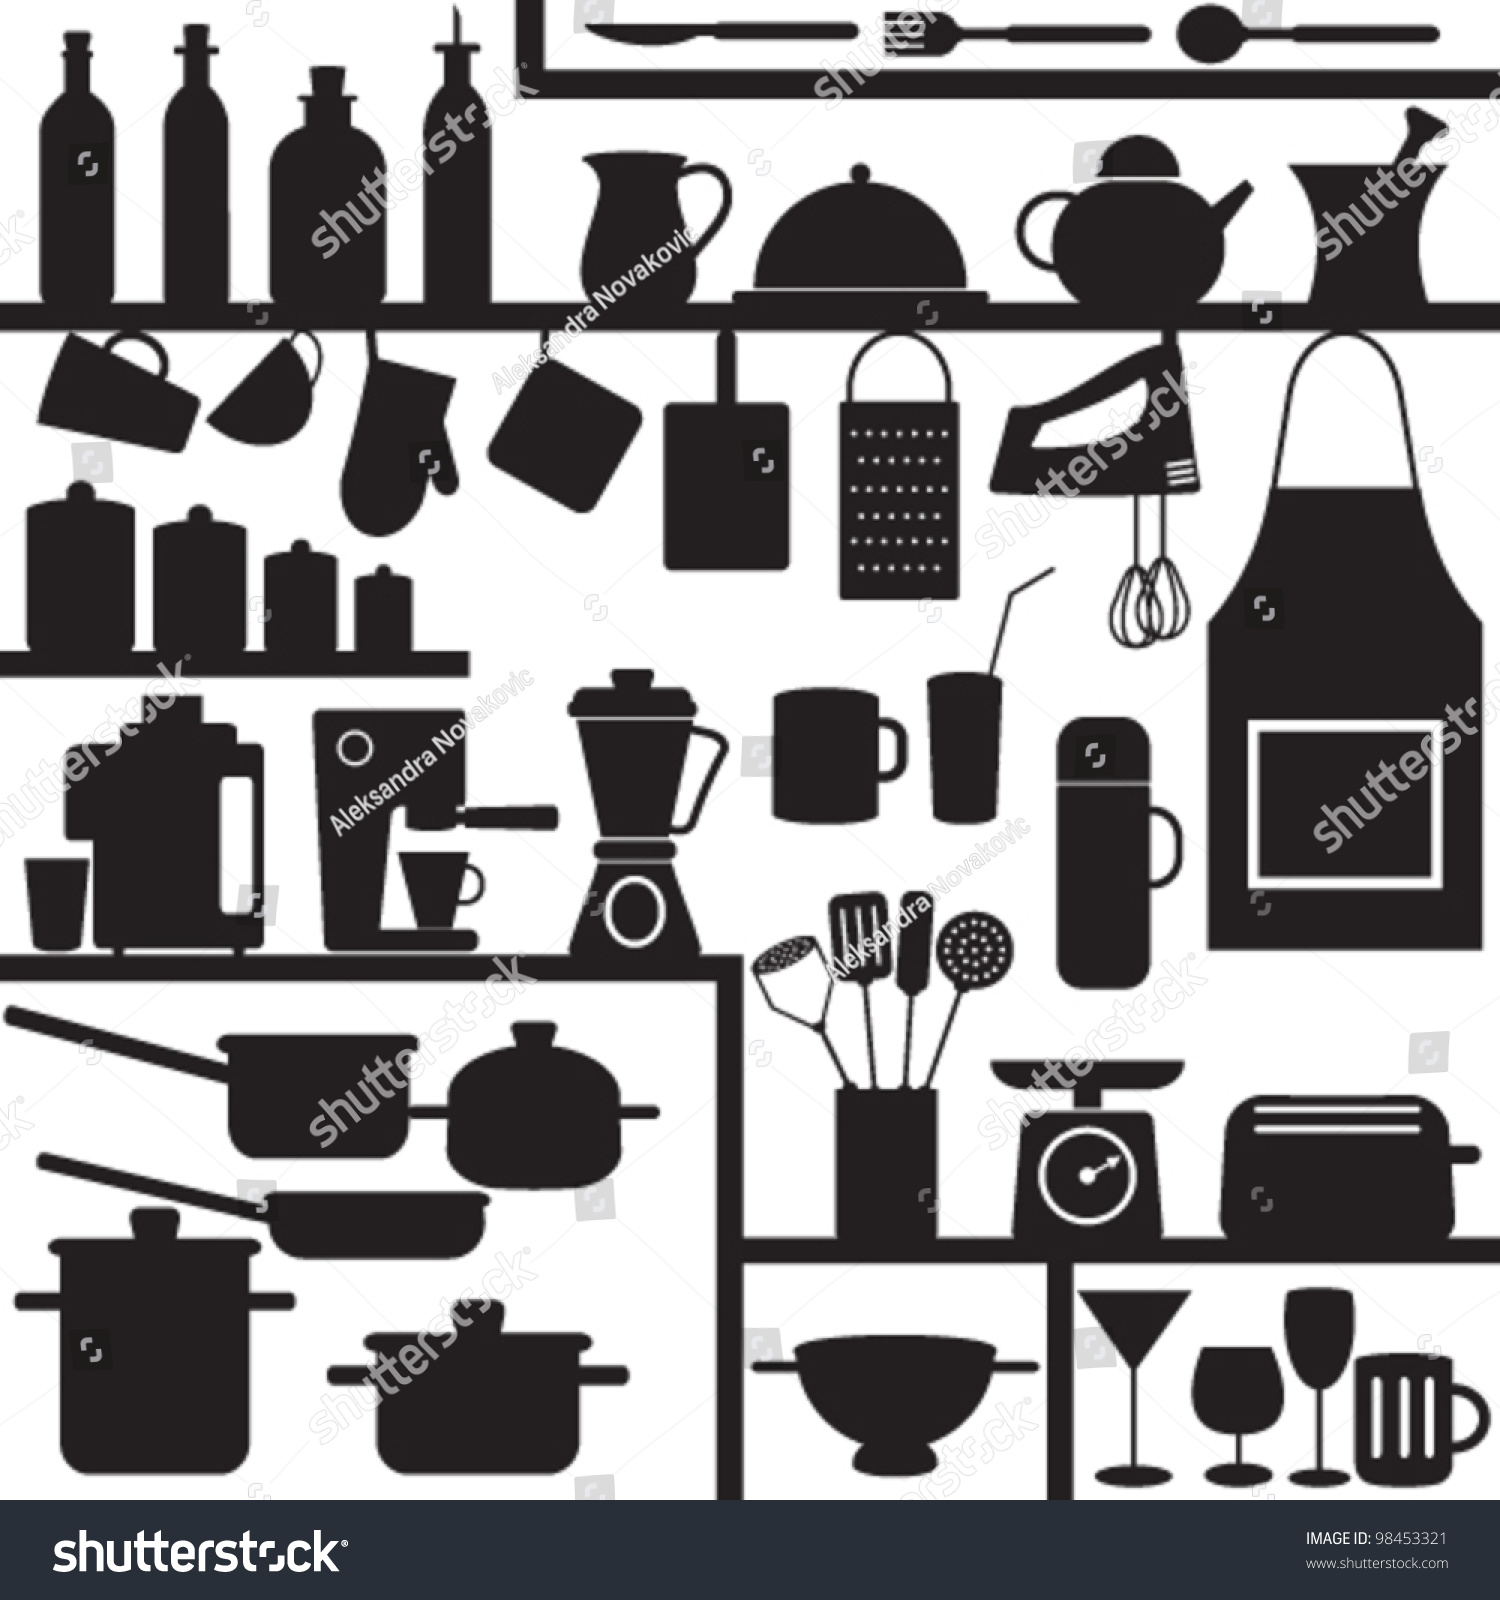 Kitchen Related Symbols Stock Vector Illustration 98453321 : Shutterstock